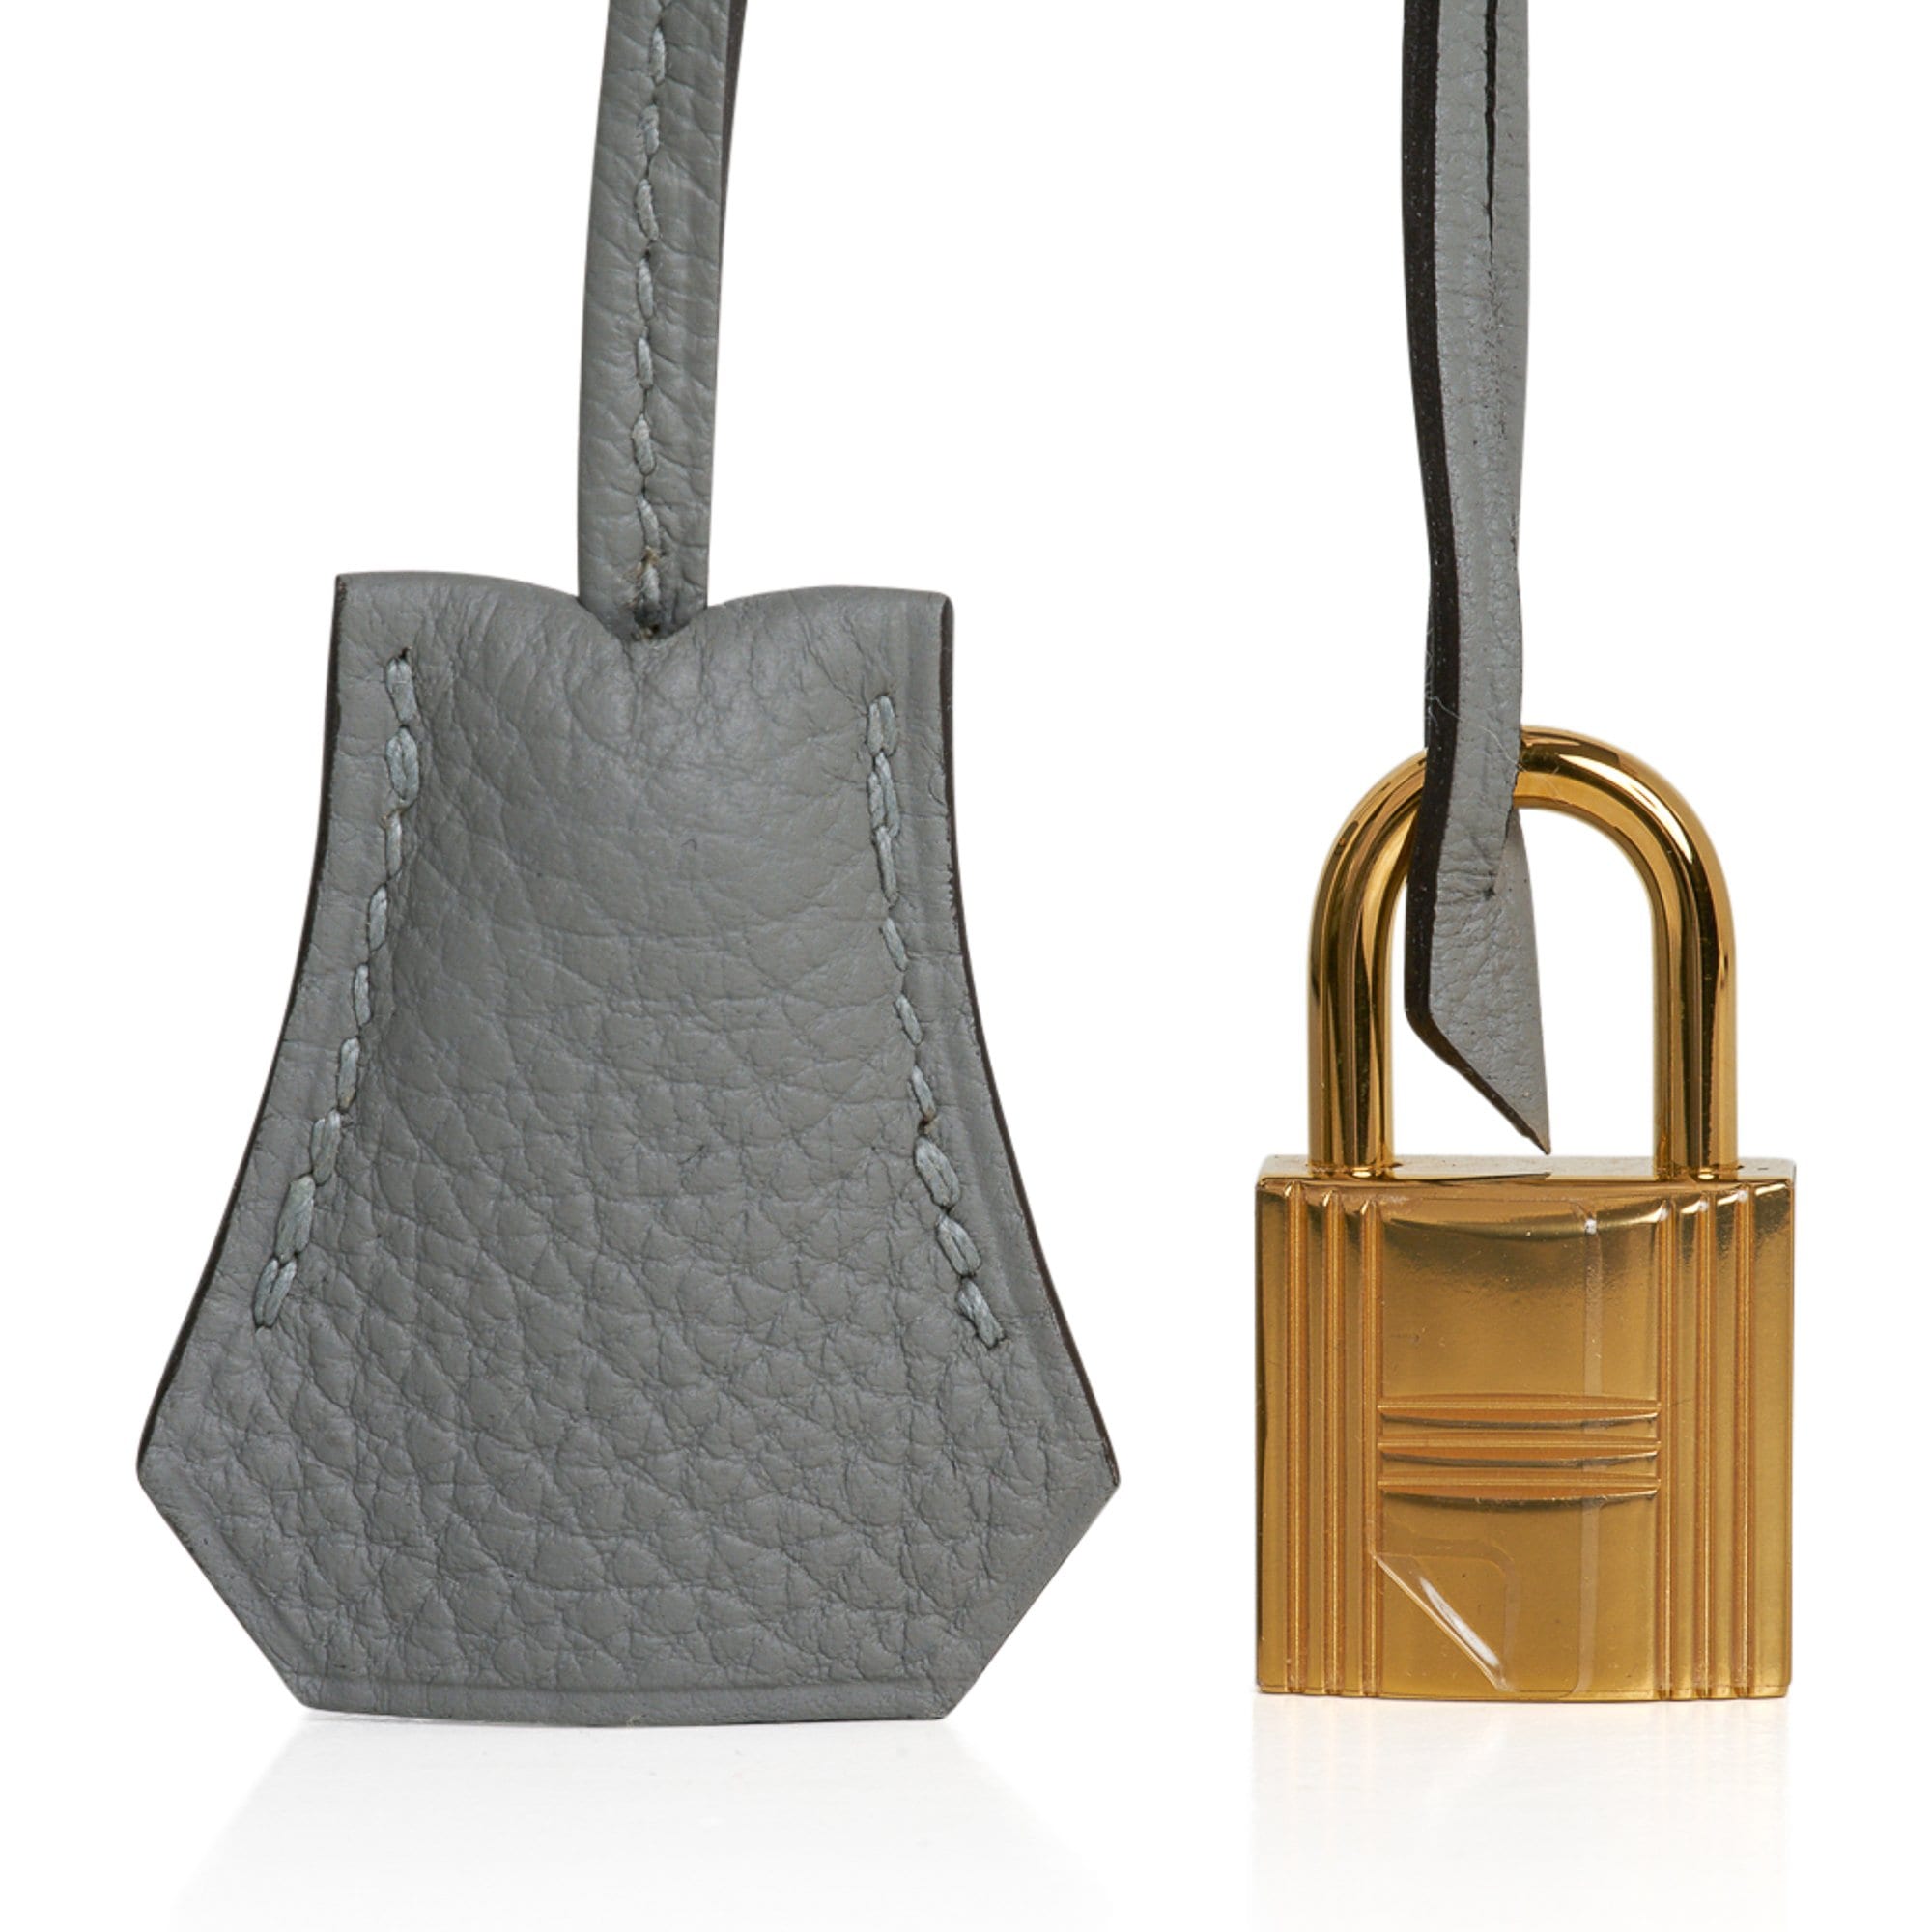 Hermès Birkin in Gris Mouette Togo leather + gold hardware